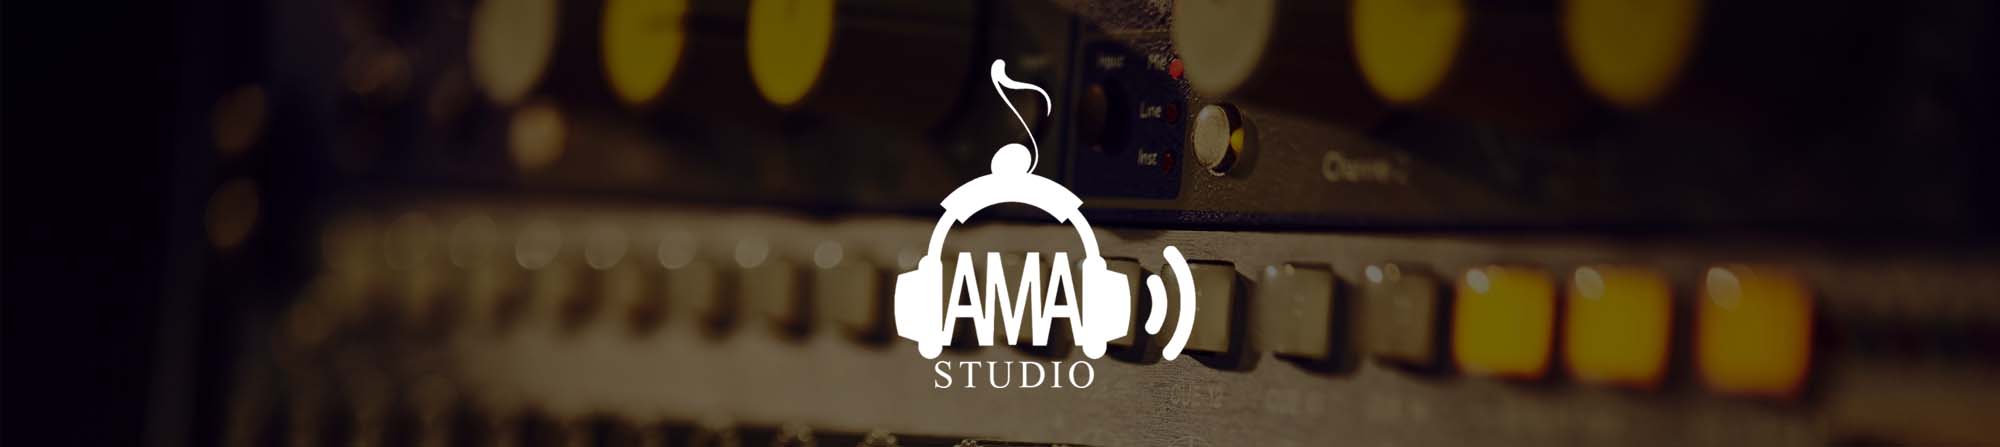 Auckland Music Academy AMA NZAMA - AMA Studio Portfolio Background | 新西兰奥克兰音乐培训中心 | 新西兰奧克蘭音樂培訓中心